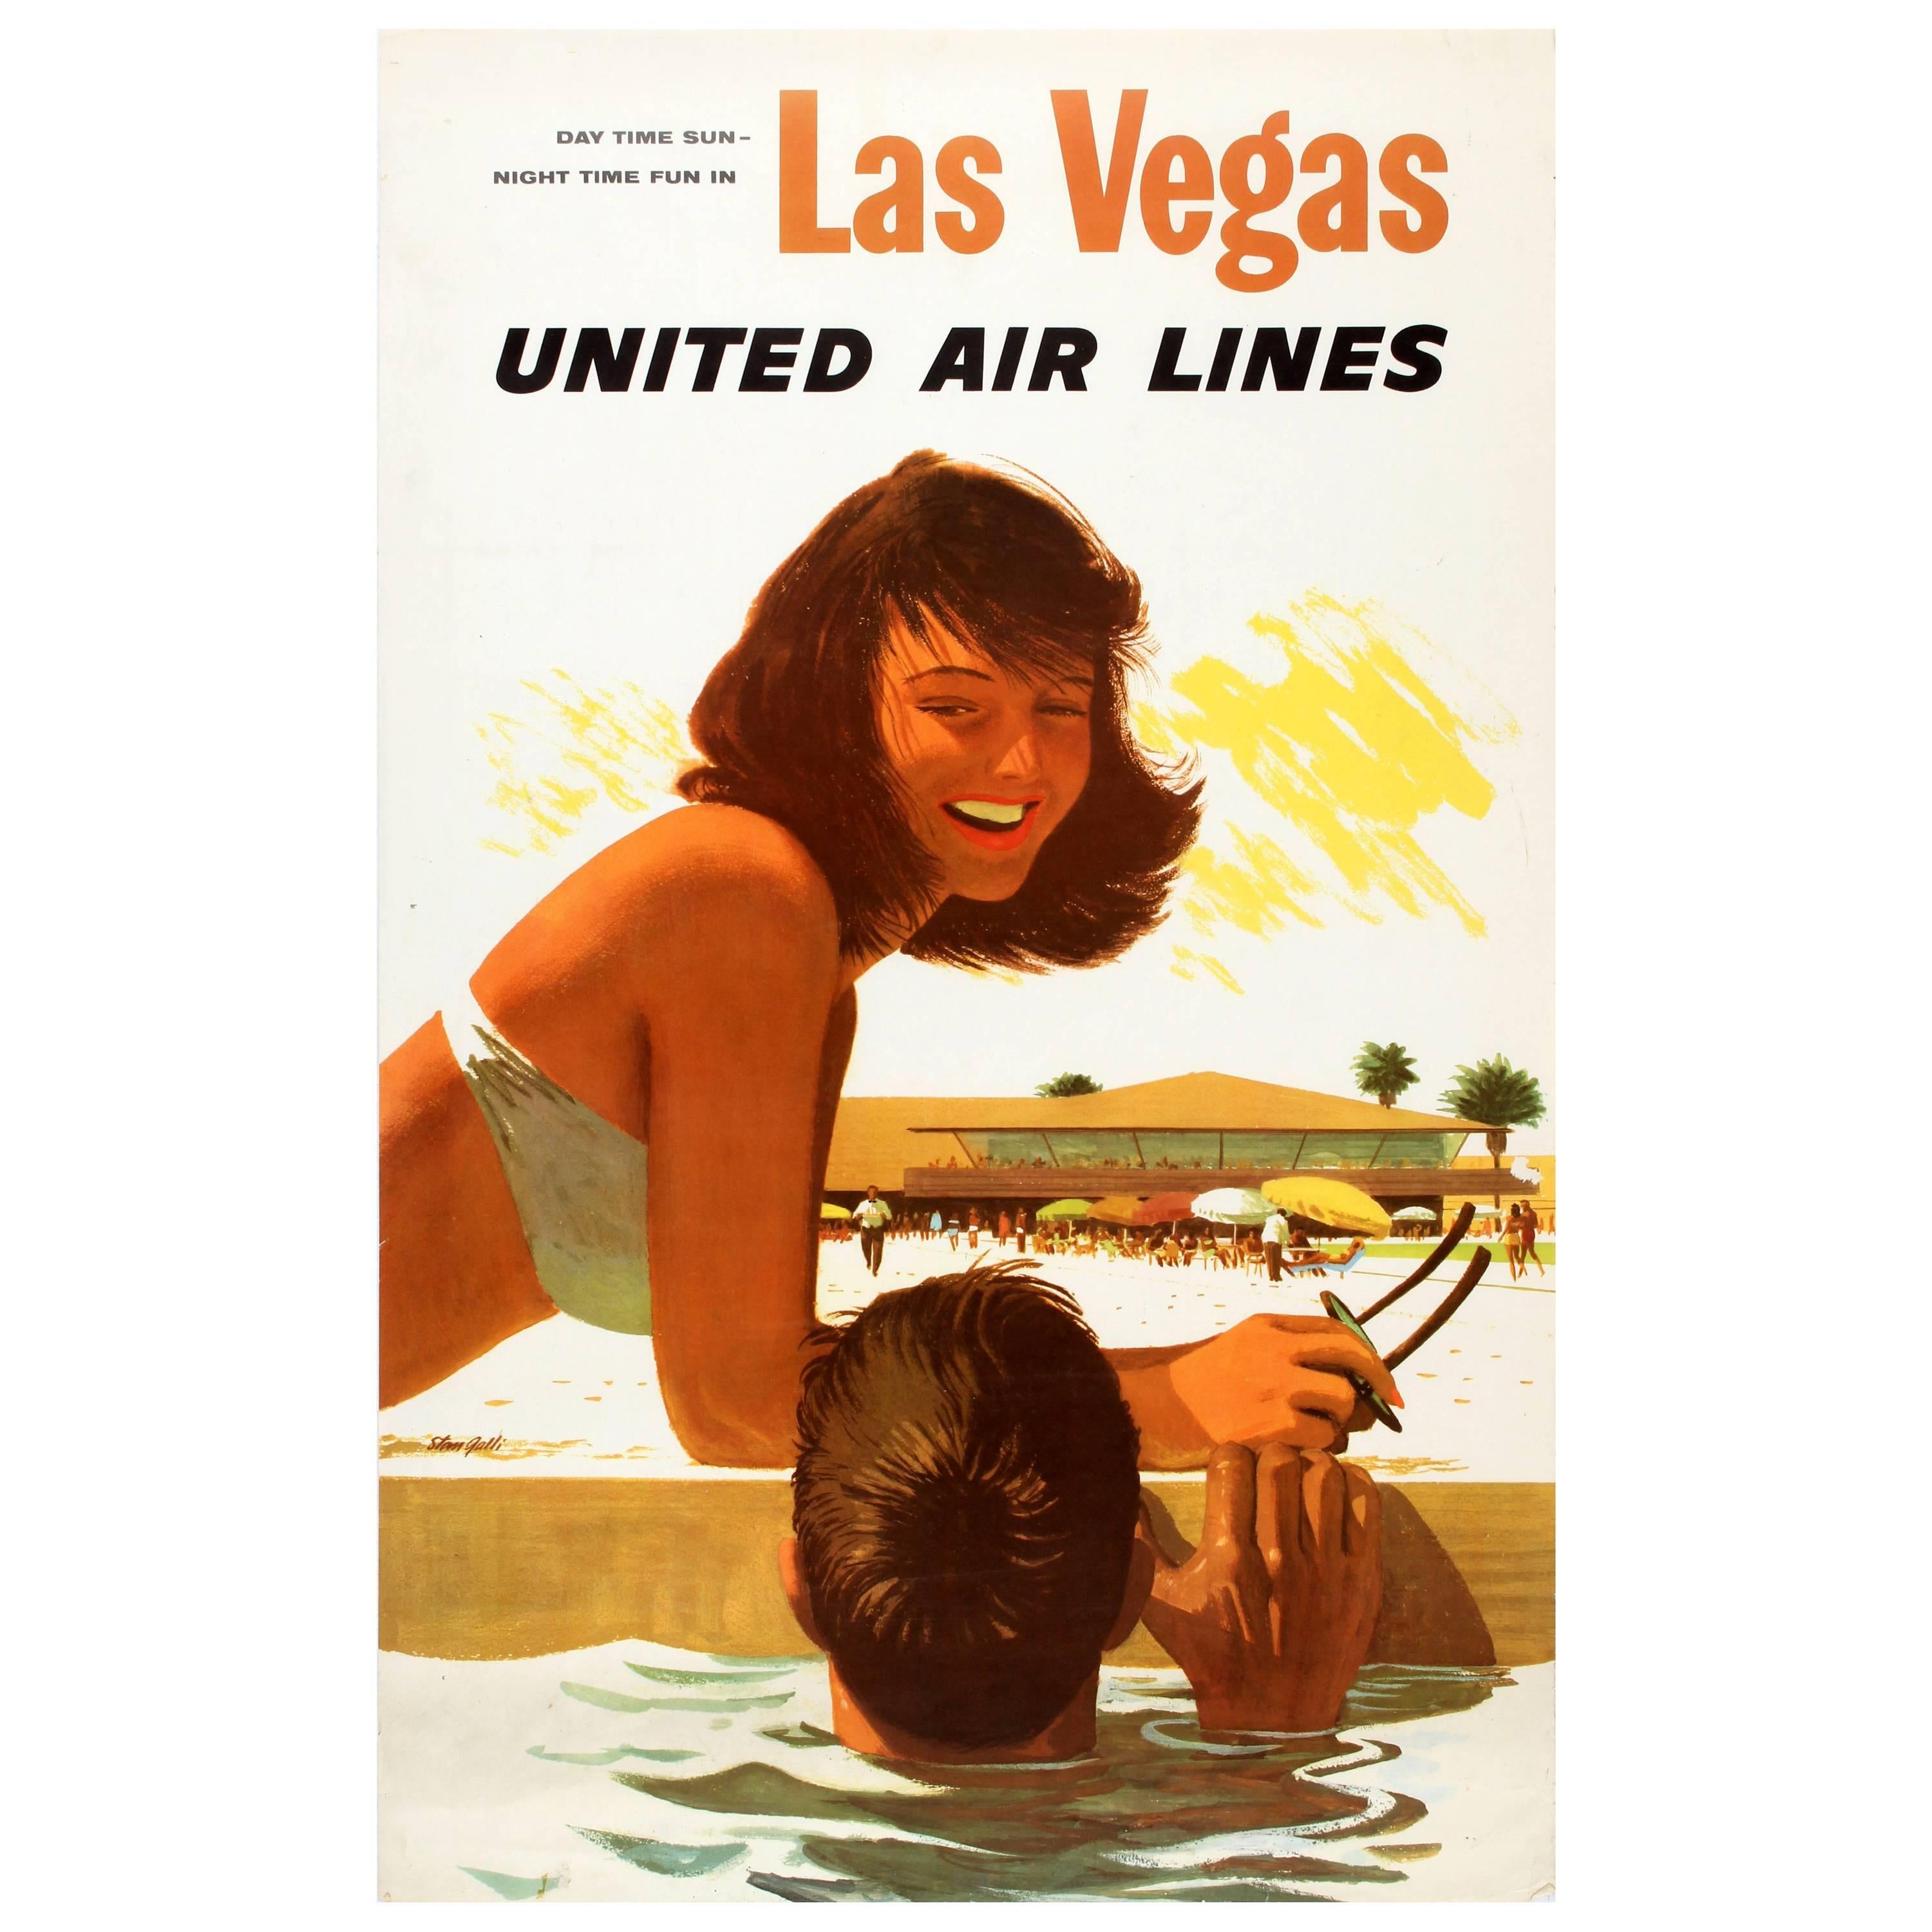 Original Vintage Las Vegas United Air Lines Poster "Day Time Sun Night Time Fun"